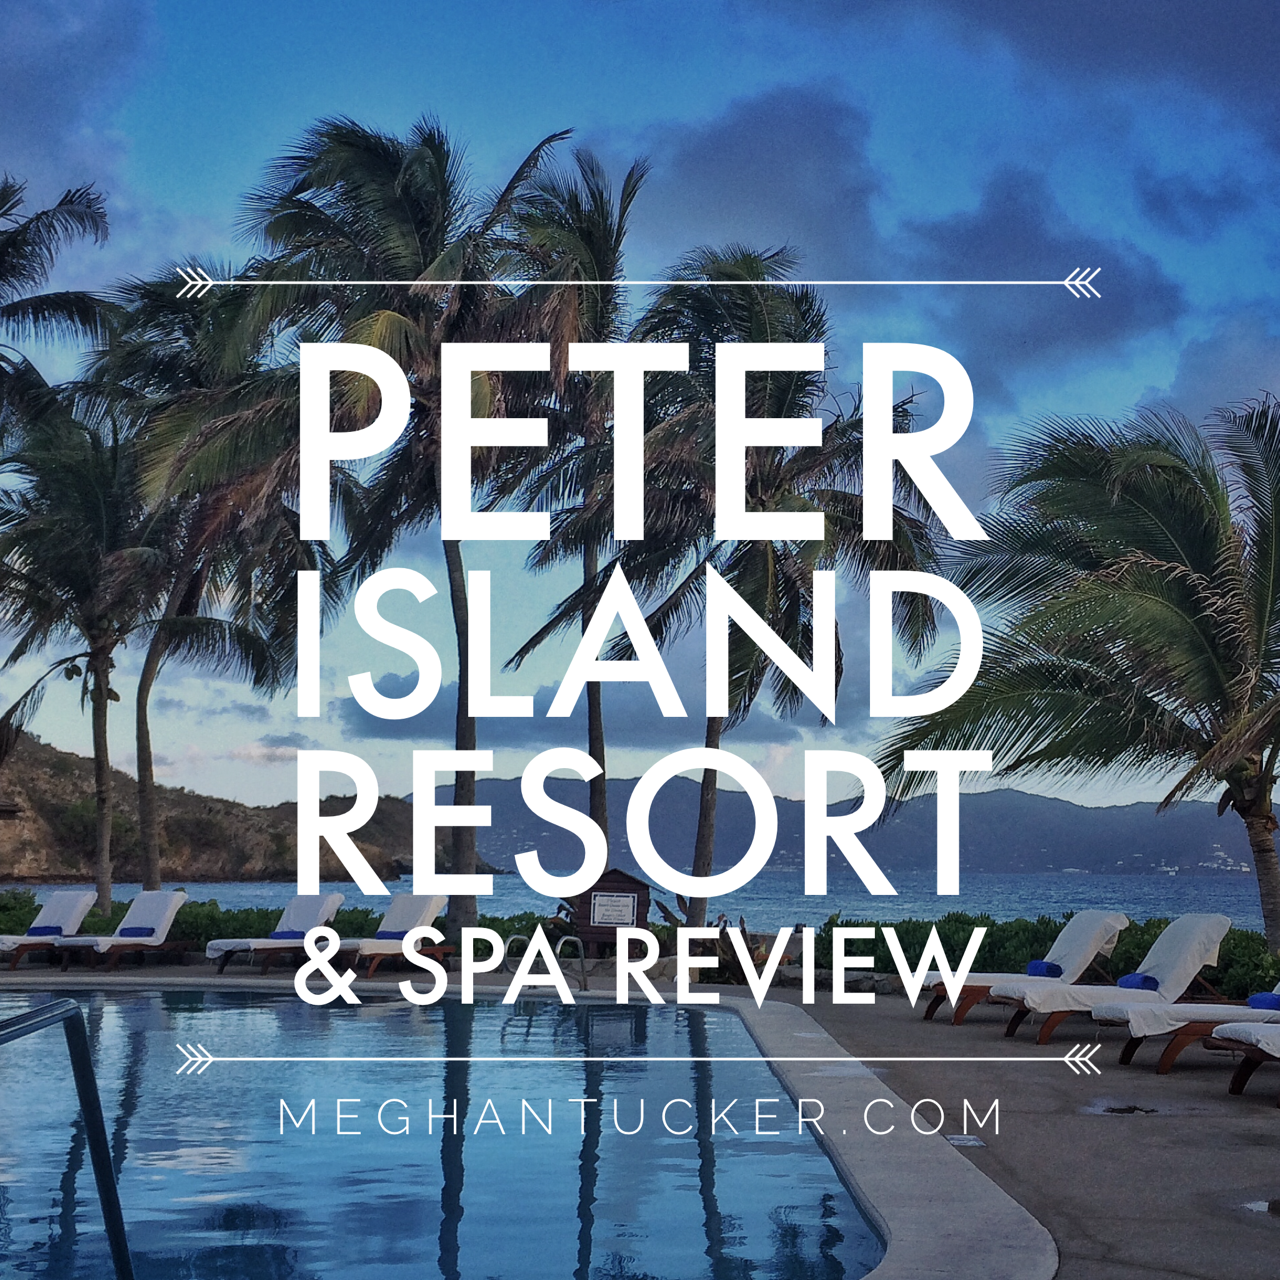 Peter Island Resort & Spa Review